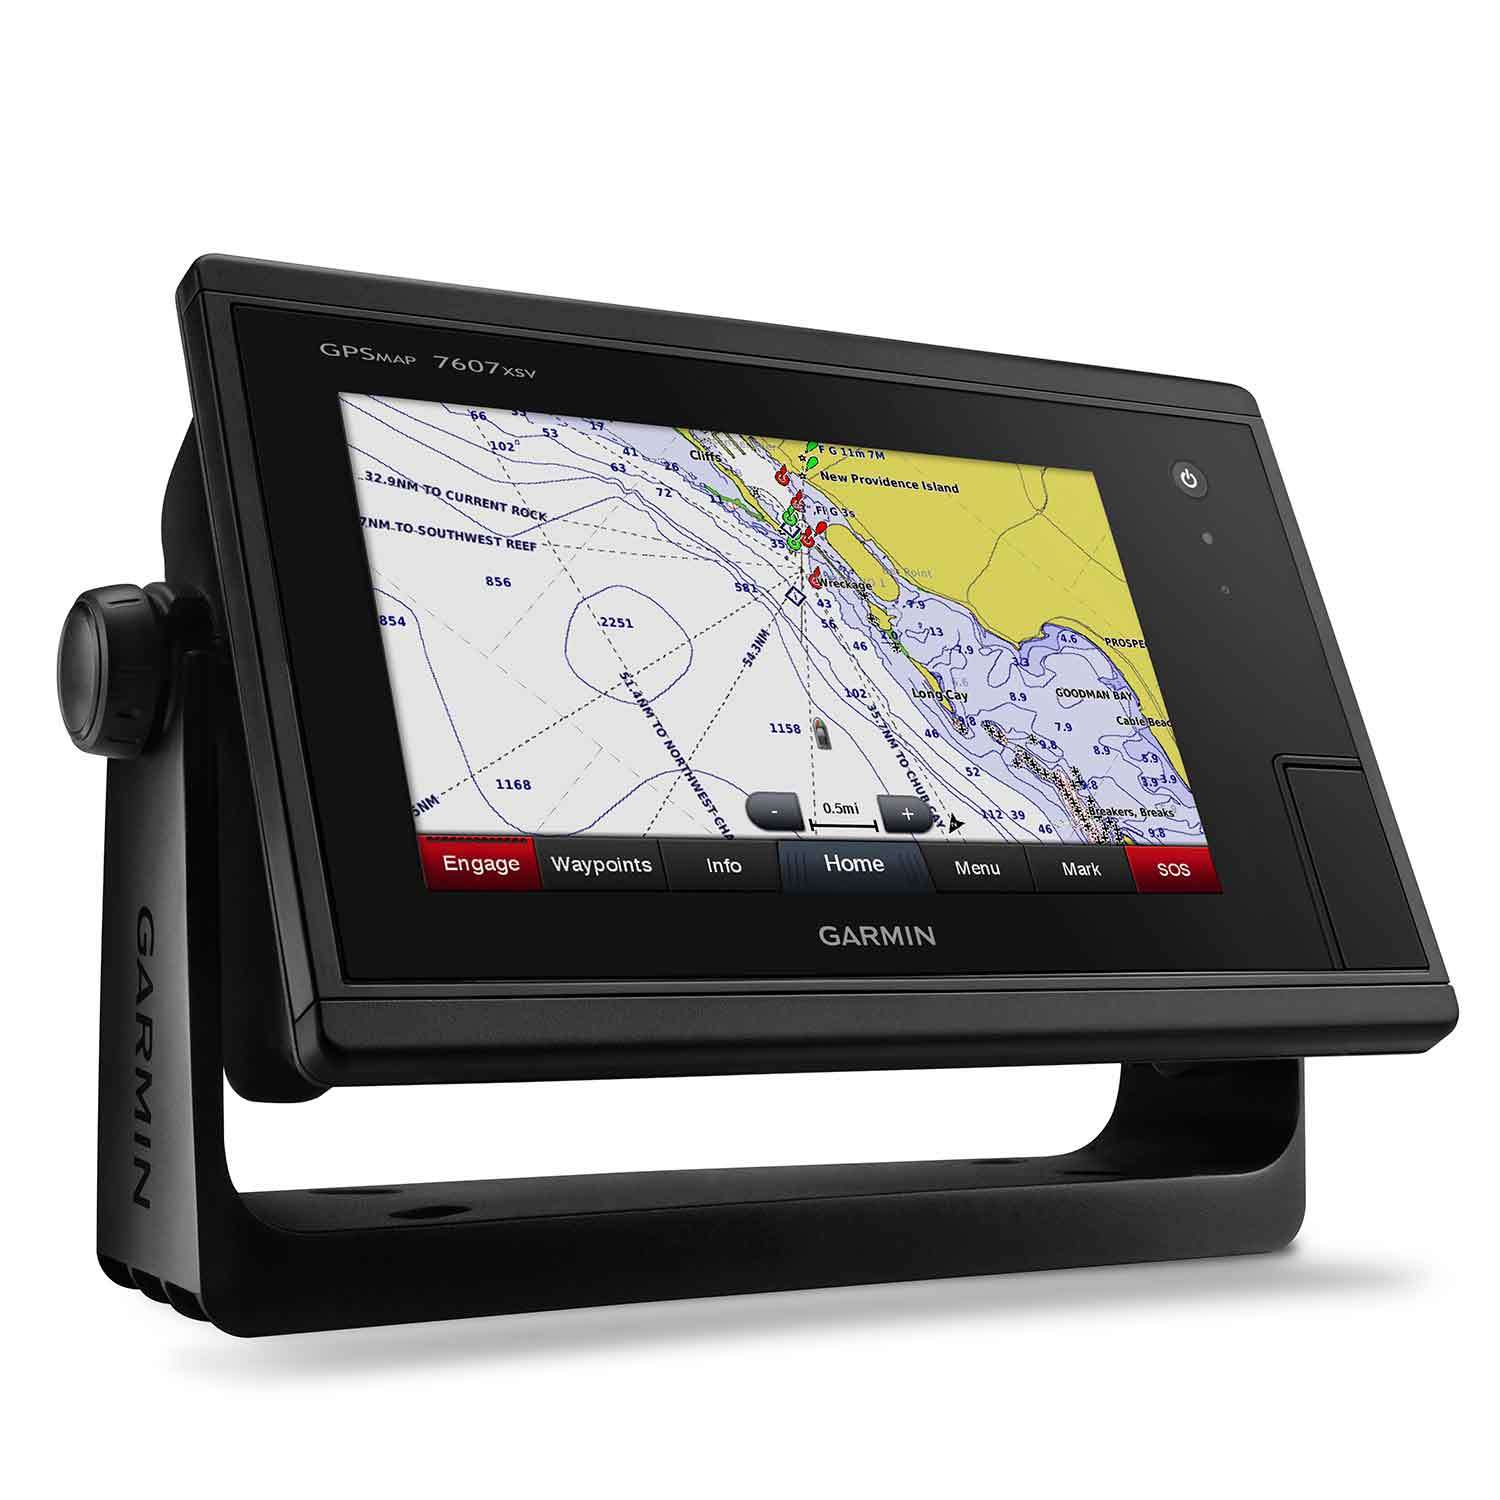 GPSMAP 7607xsv Multifunction Display with Coastal and LakeVu HD Inland Charts West Marine